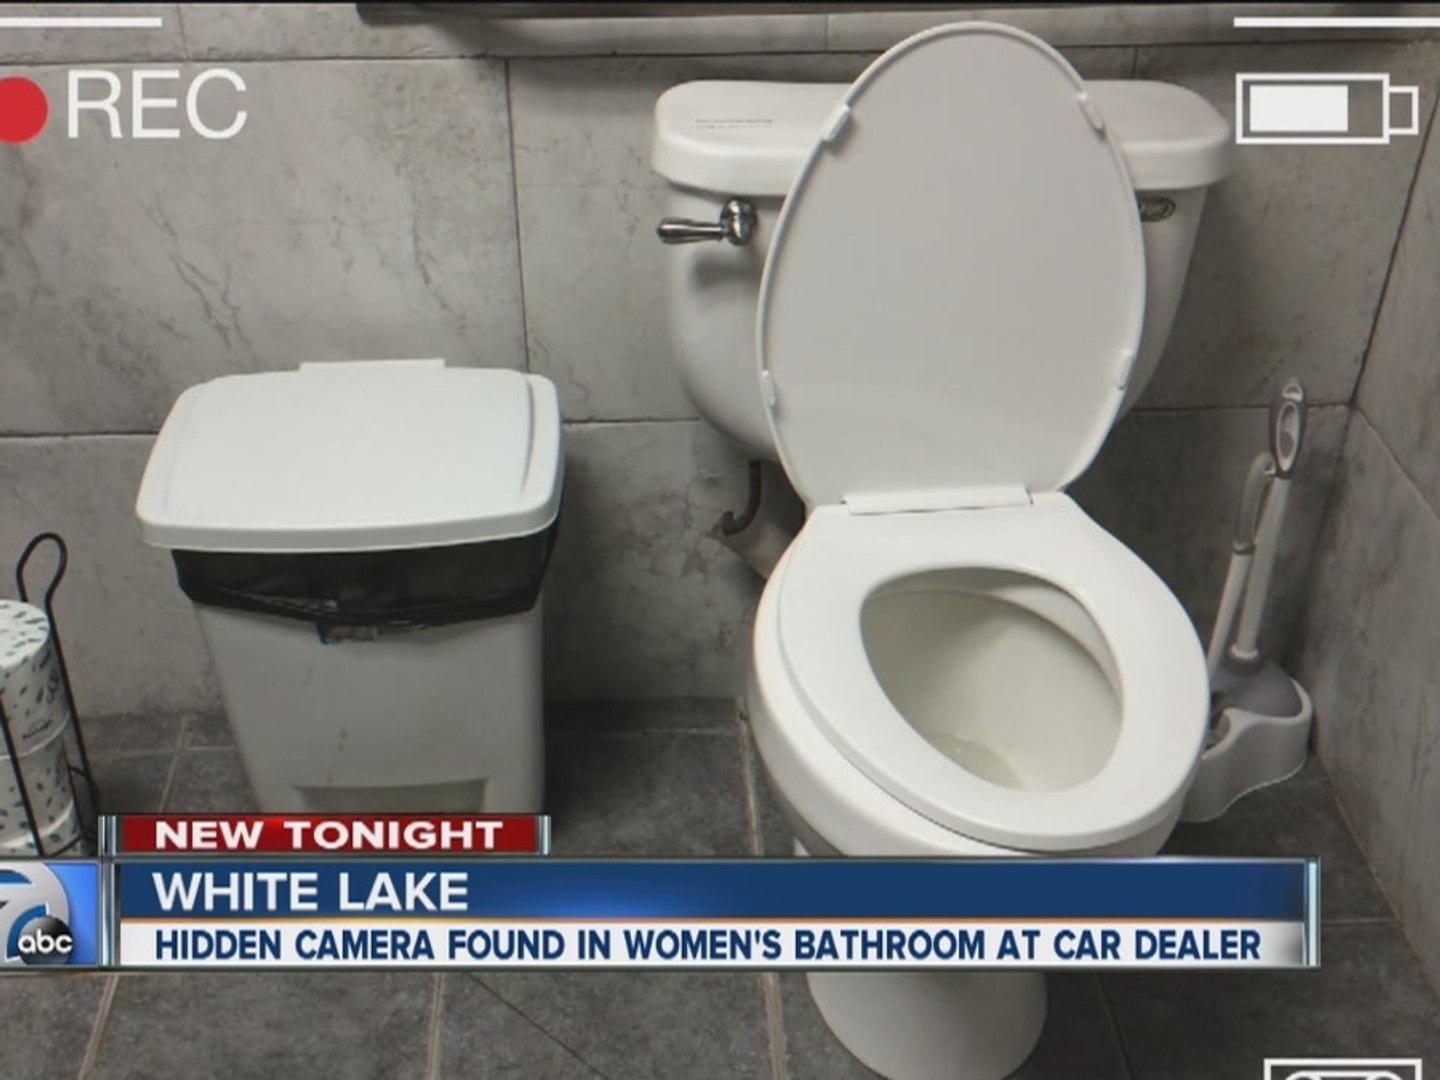 debbie enander recommends hidden camera in restroom pic